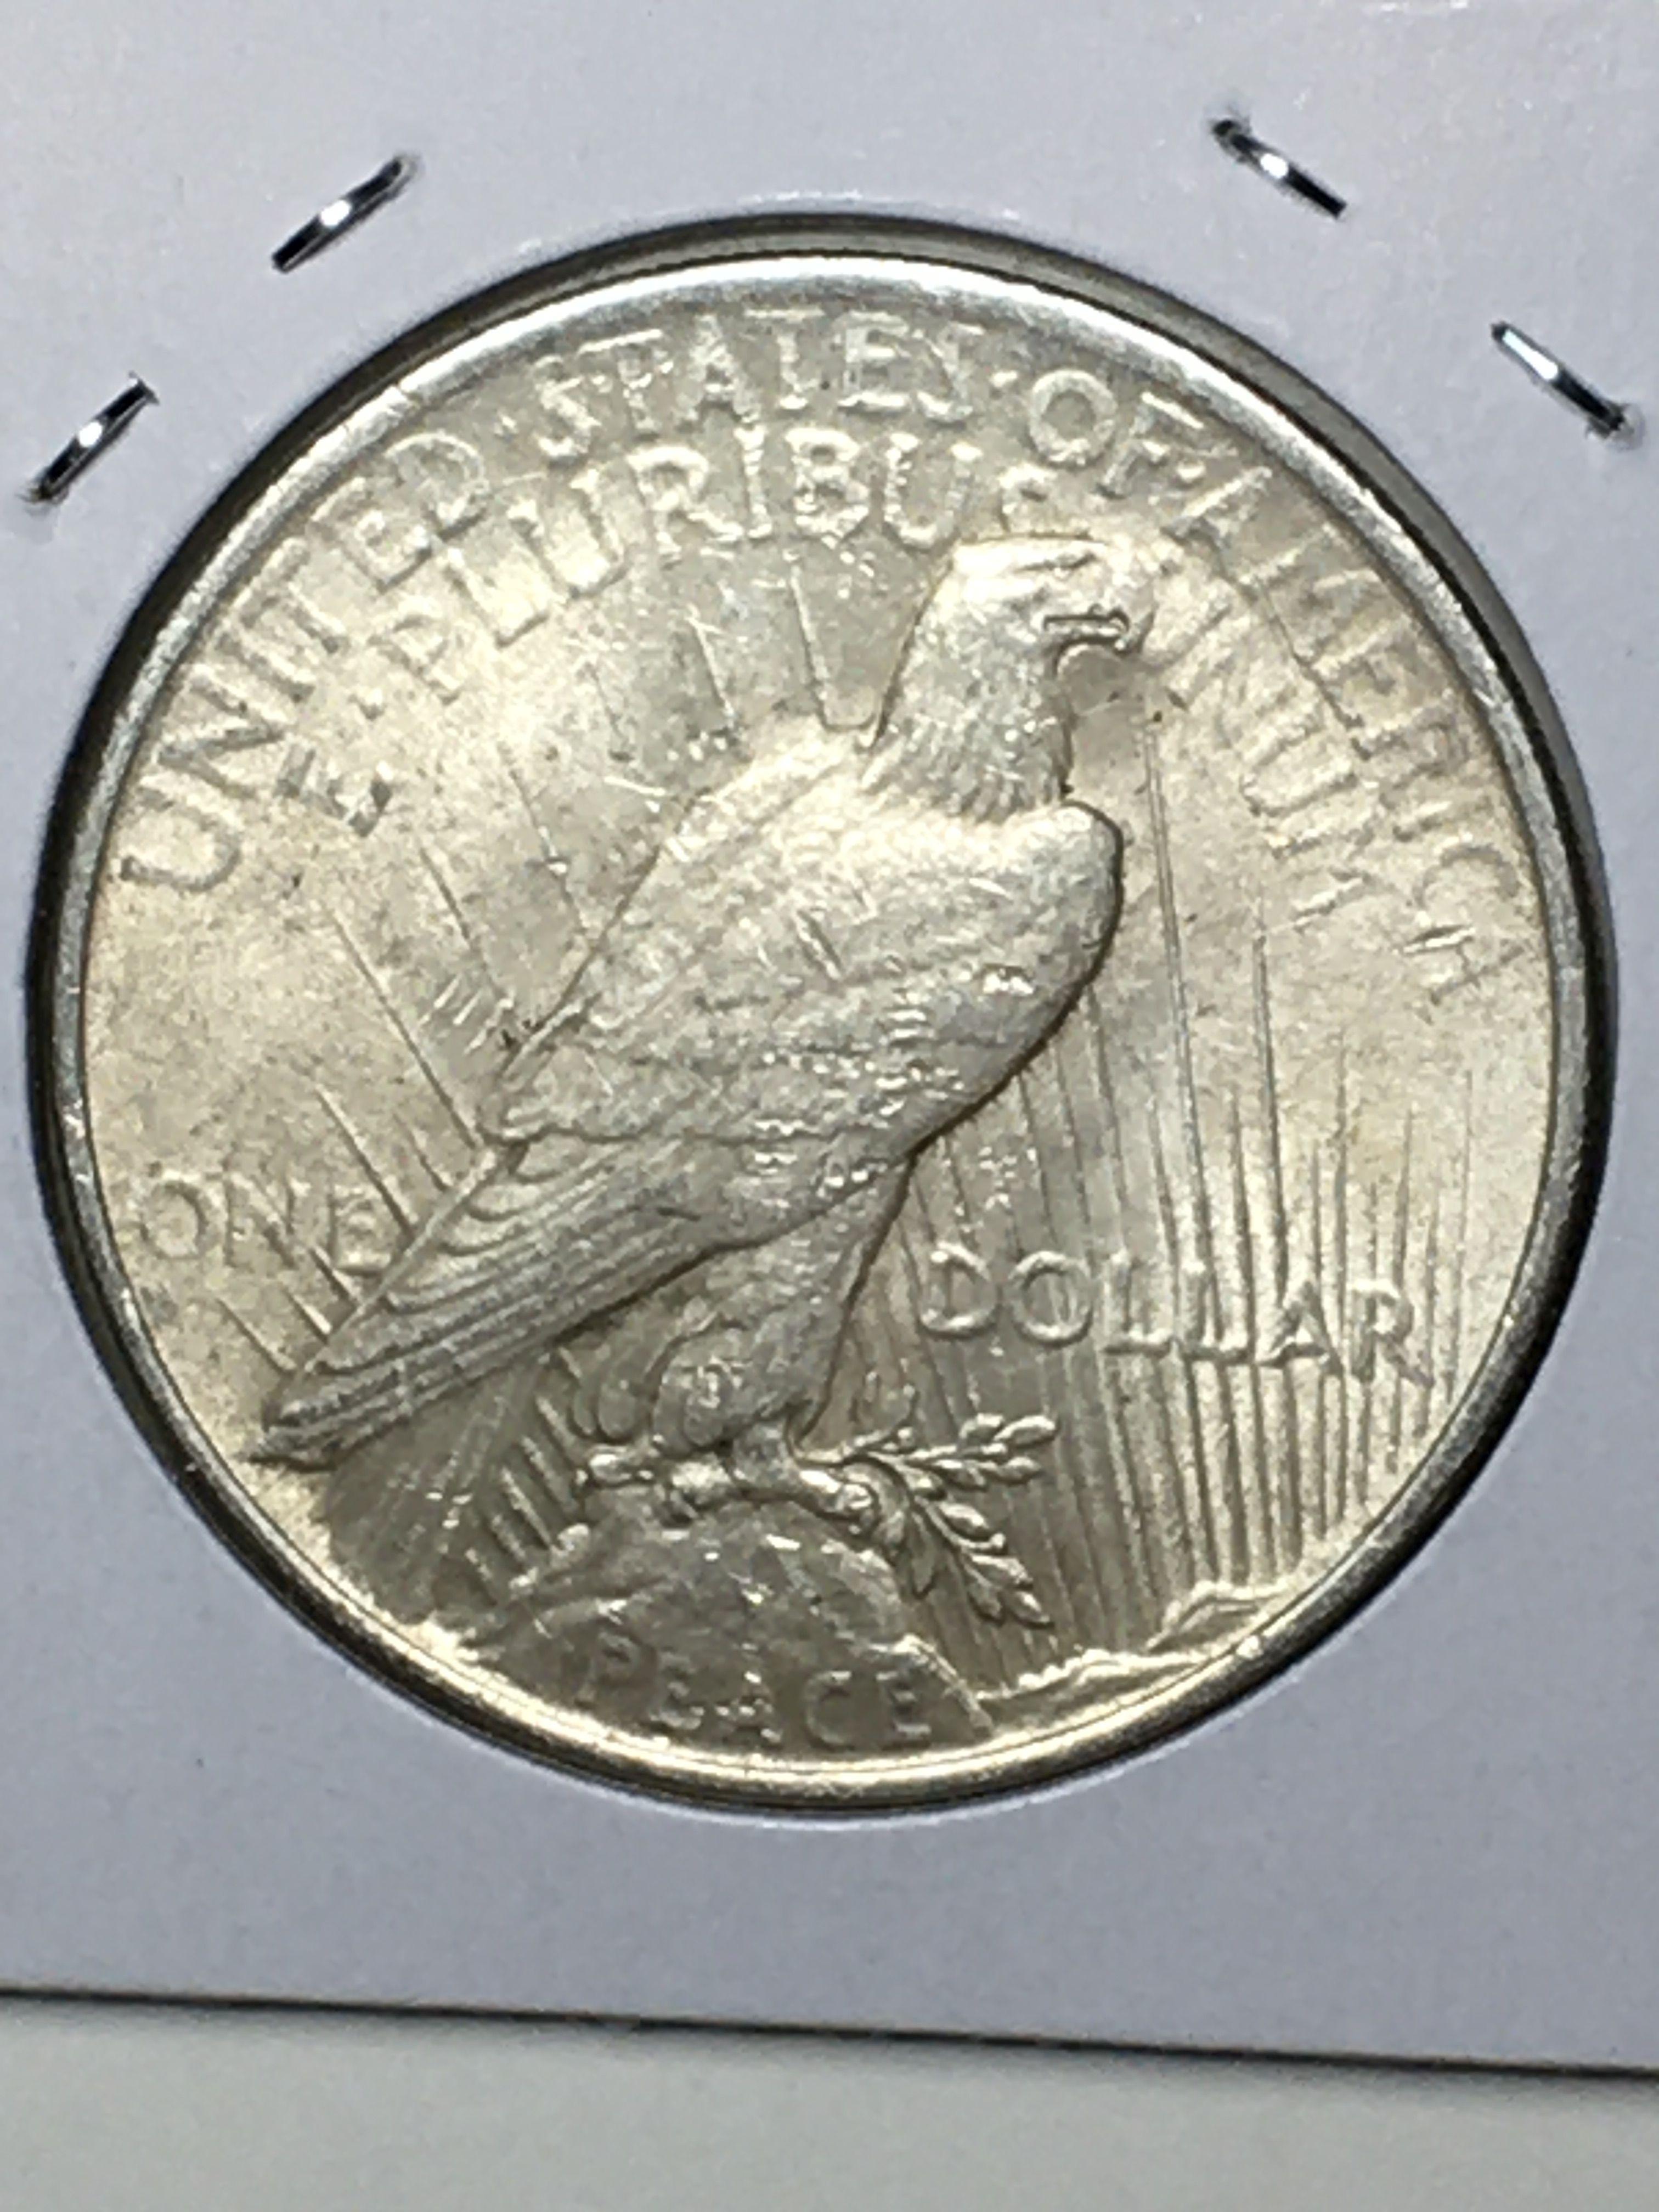 1922 P Peace Dollar